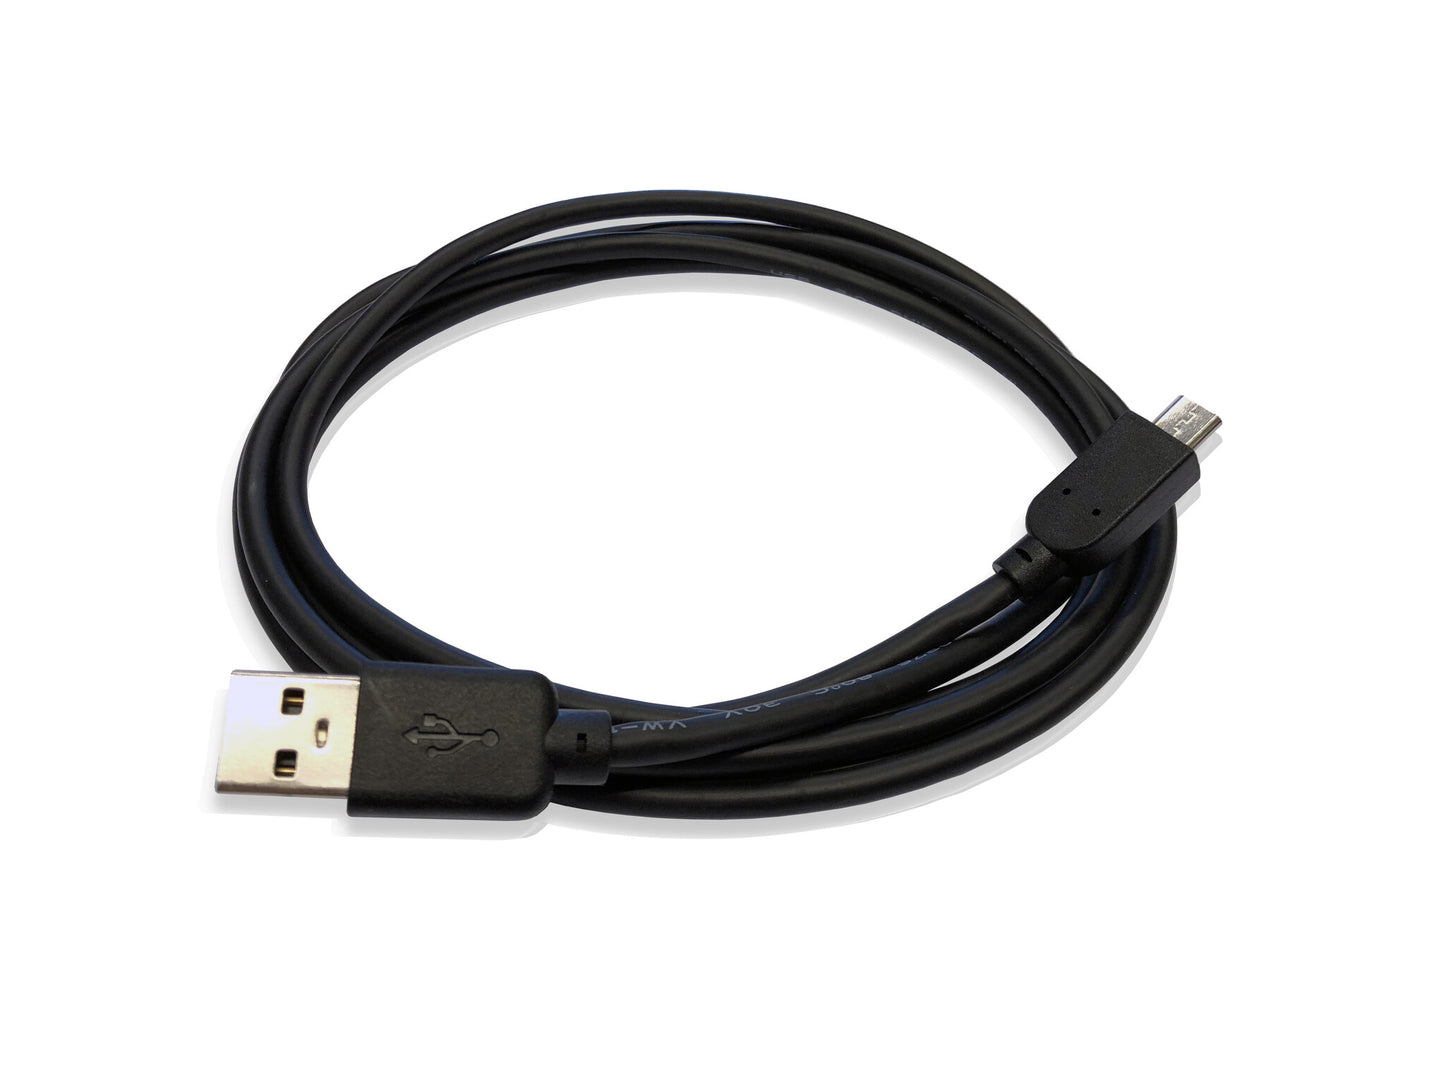 Nexmosphere USB-micro USB powersupply cable, 180cm, black